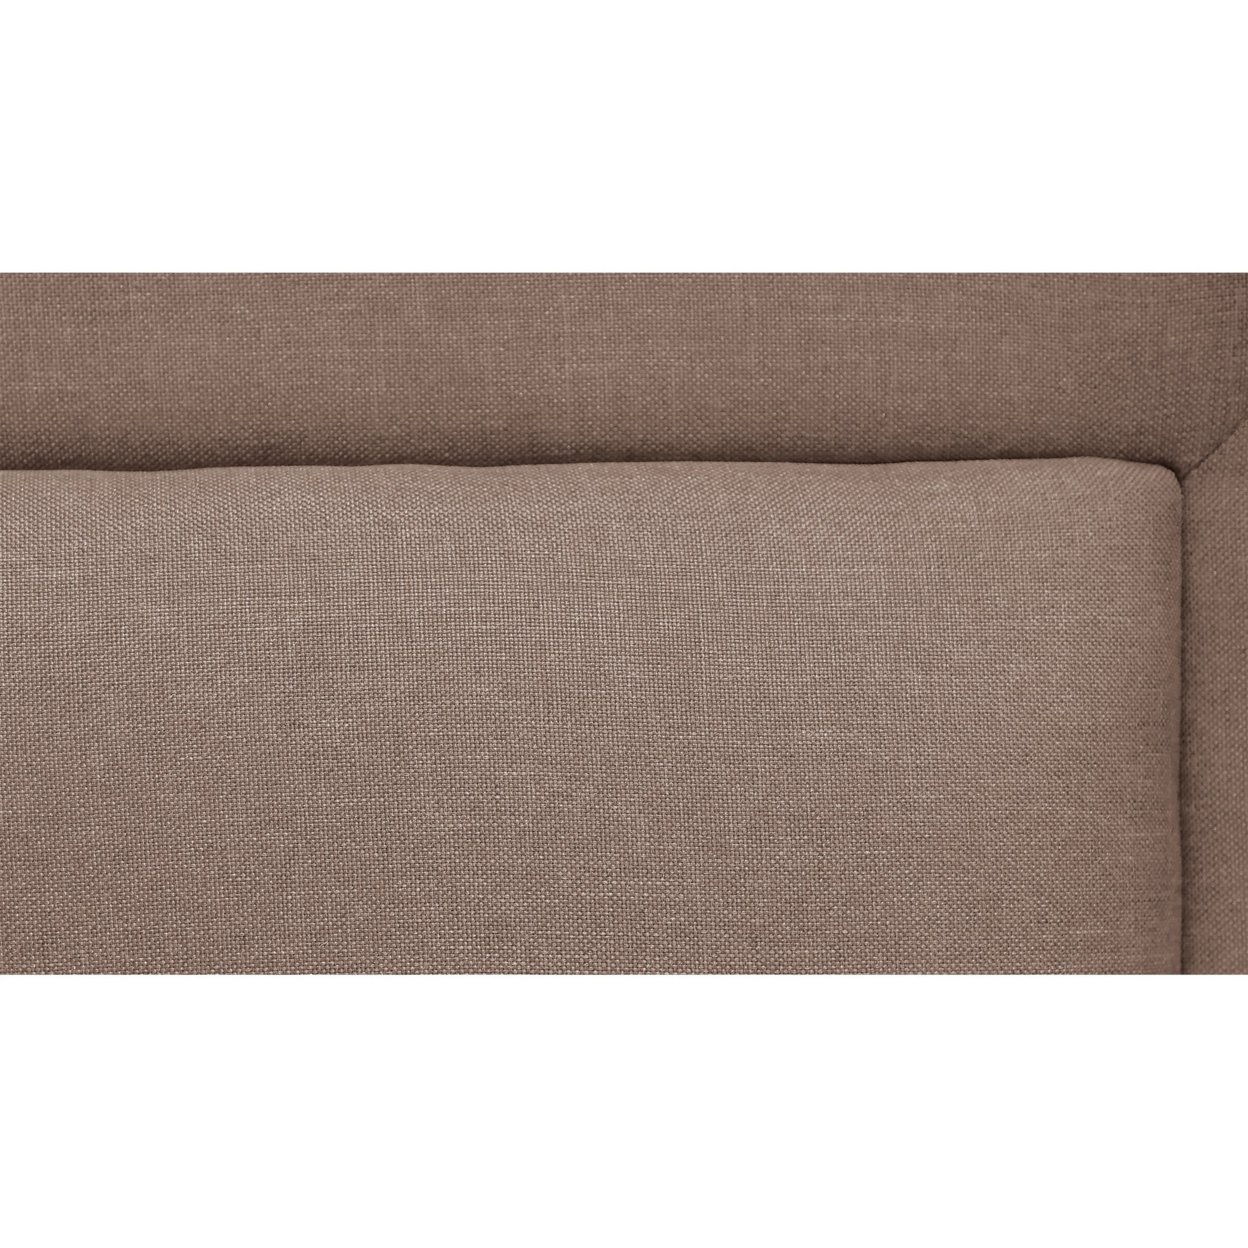 Liam Full Bed, Brown Polylinen Upholstered Bed, Horizontal Tufted Headboard- Saltoro Sherpi